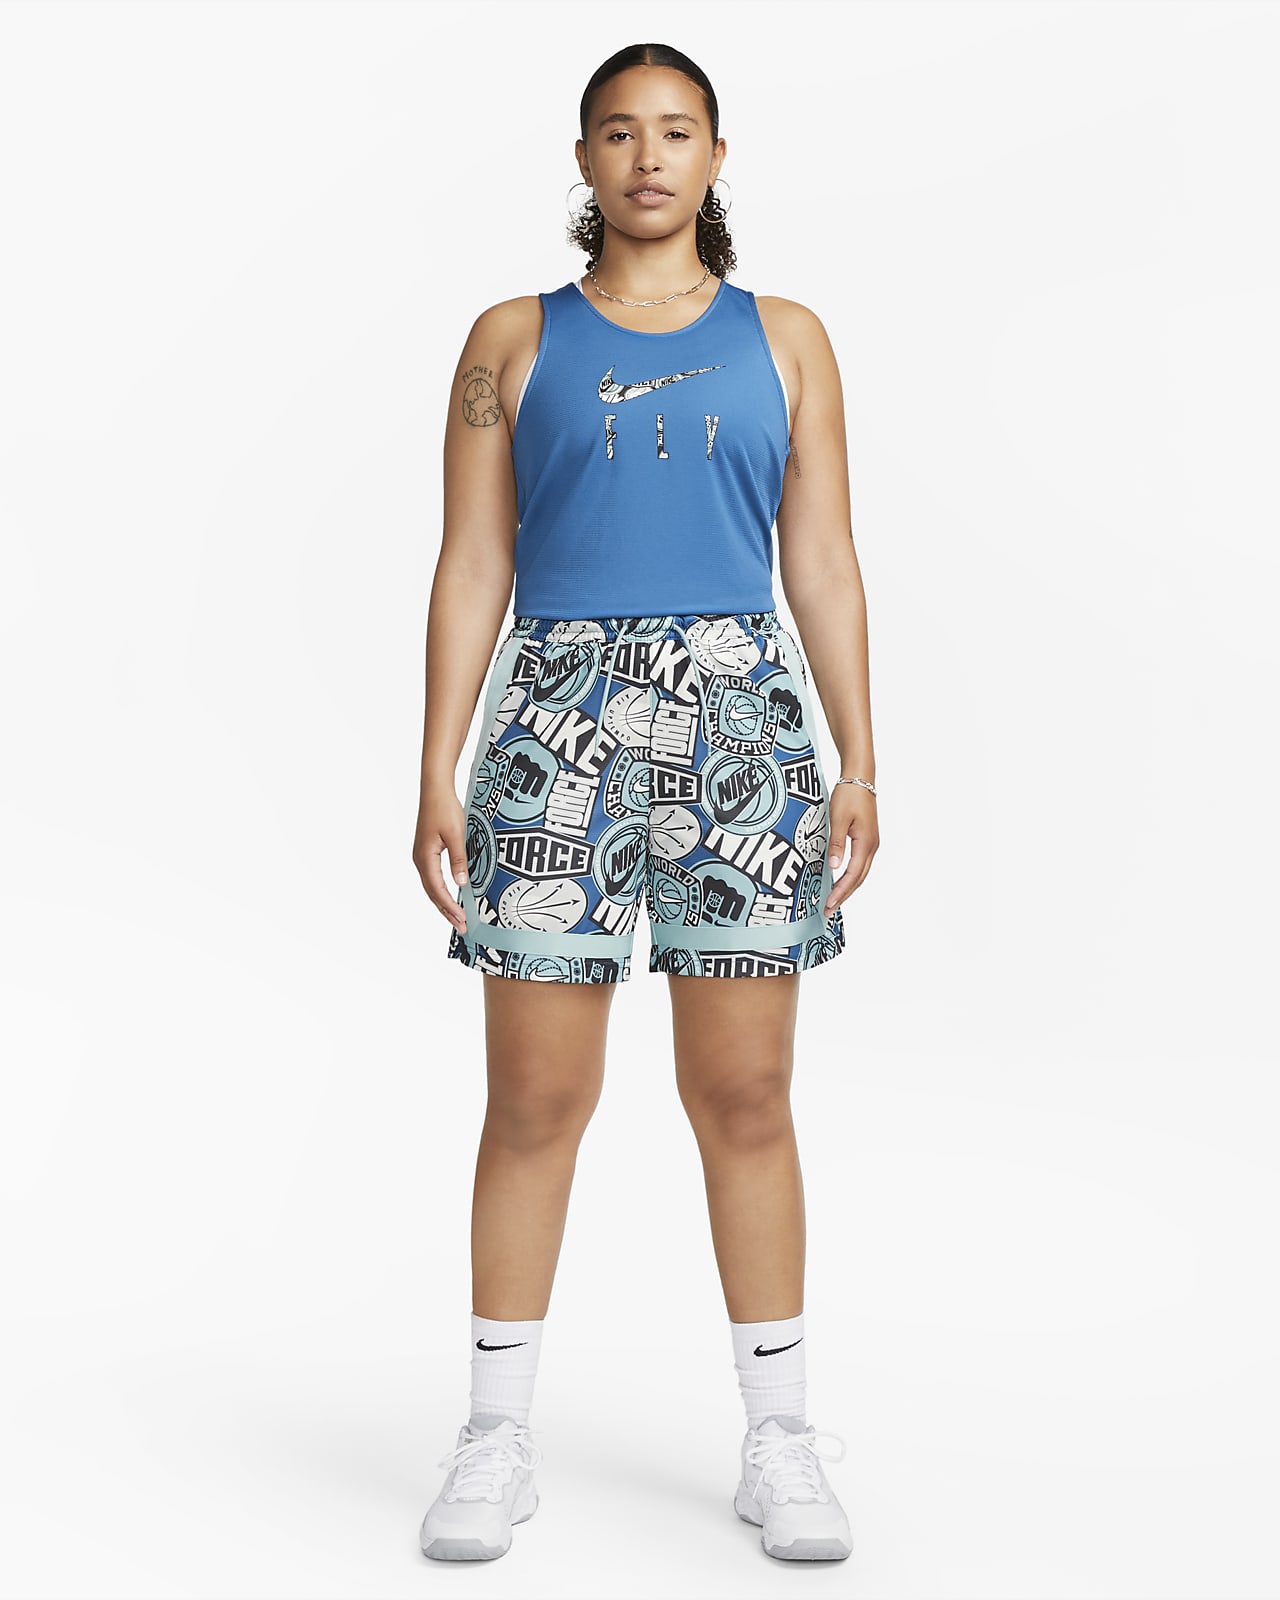 Mini skirt woman Nike Air - Skirts & Shorts - Clothing - Women